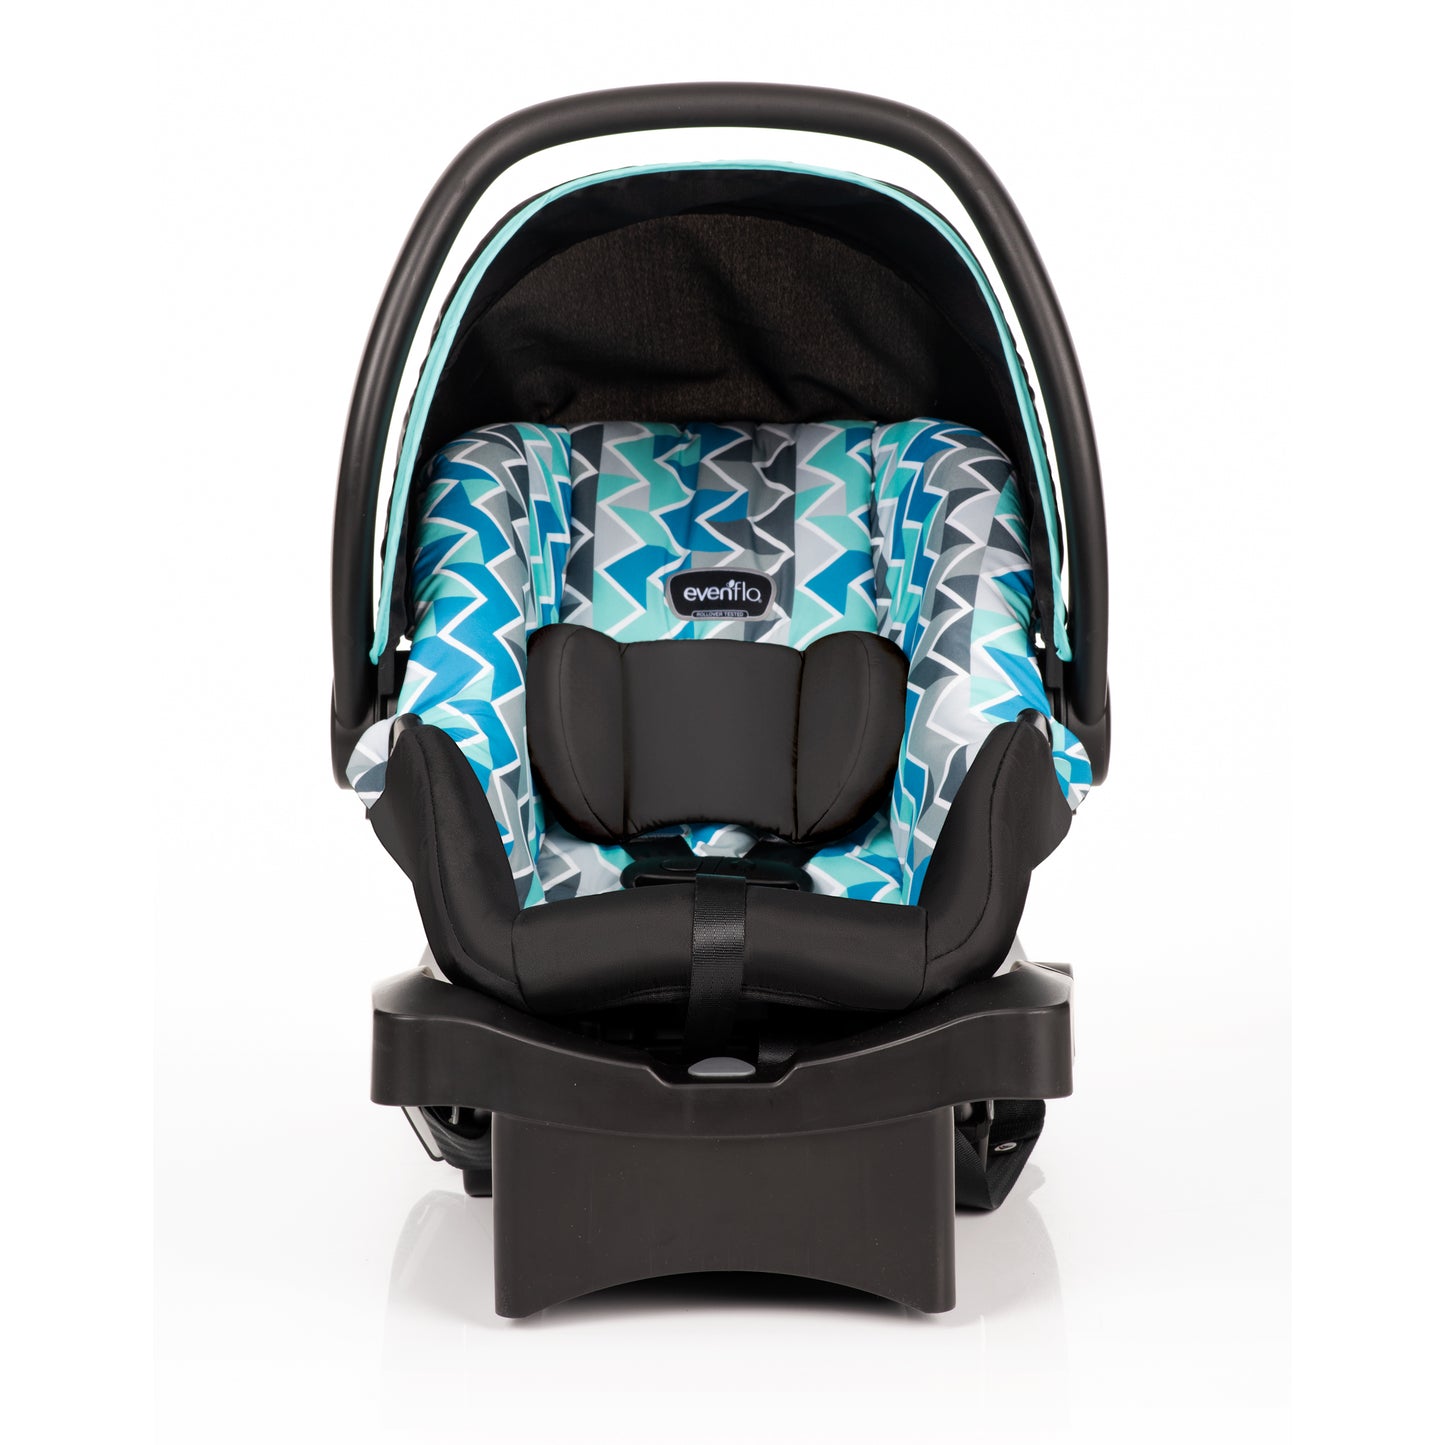 LiteMax Sport Infant Car Seat